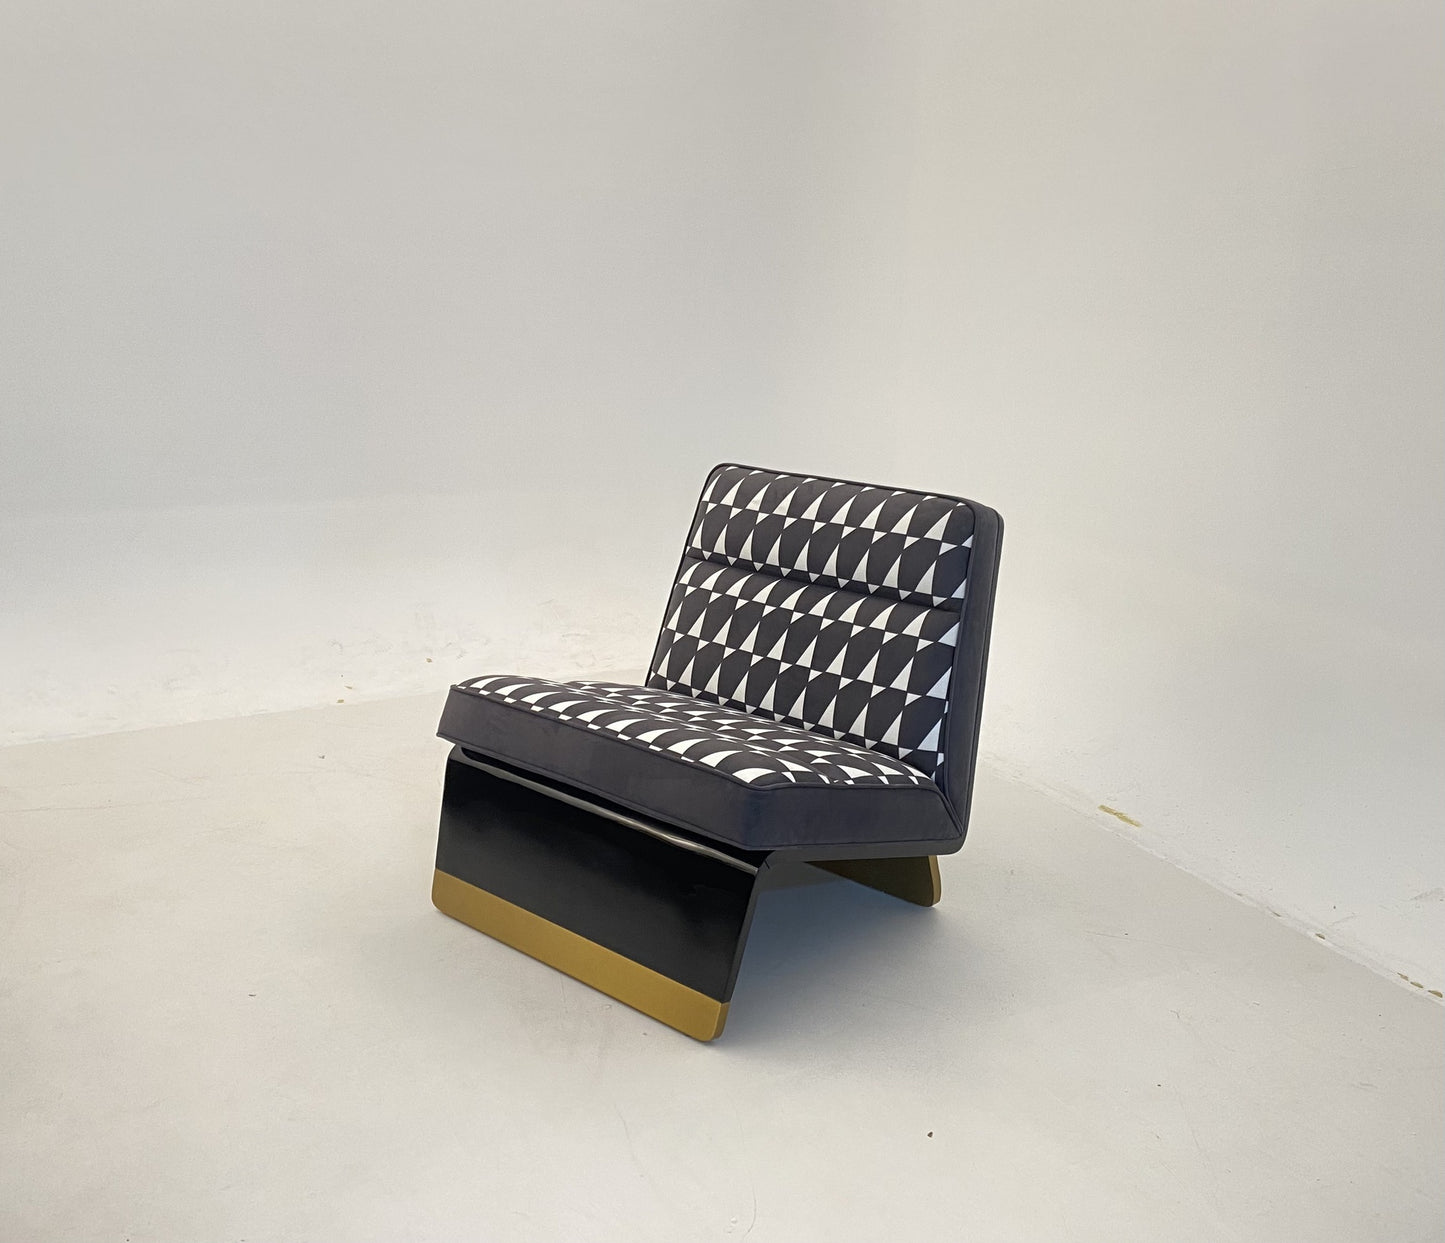 Baxter Greta Special Edition Printed Leisure Chair